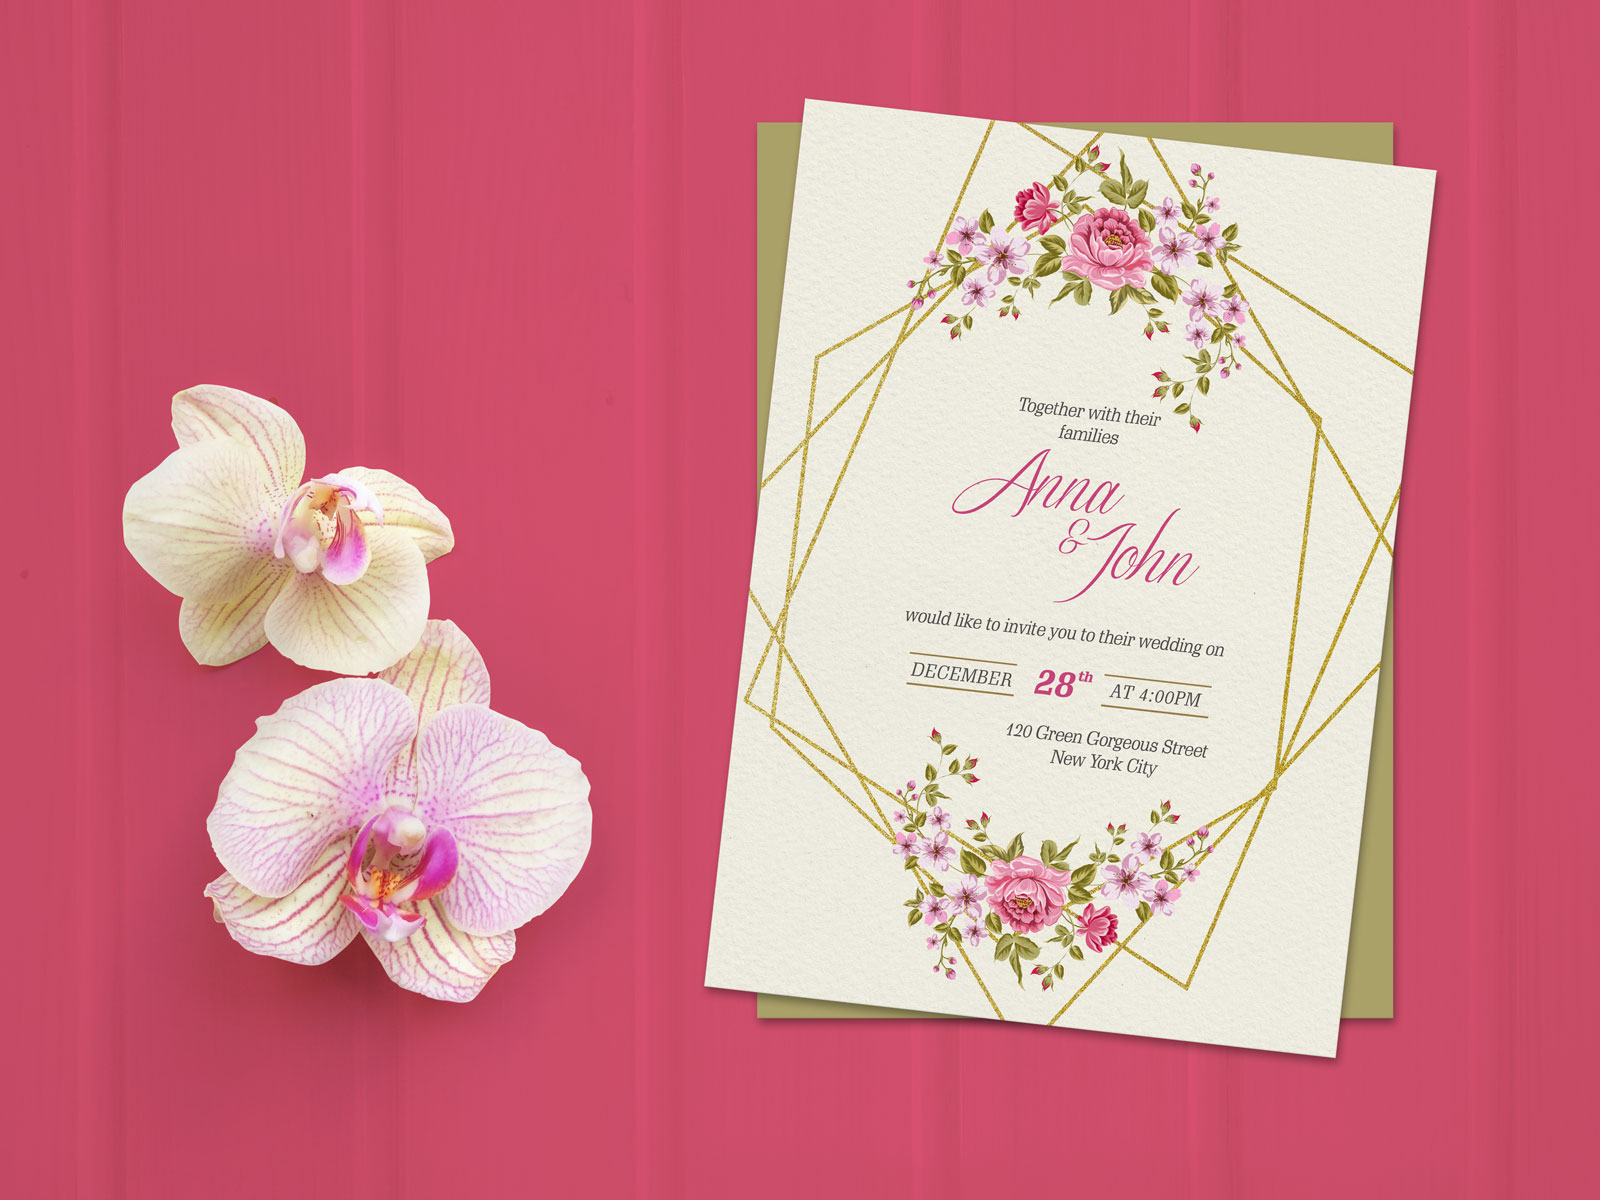 Download Free Wedding Invitation Card Template & Mockup PSD ...